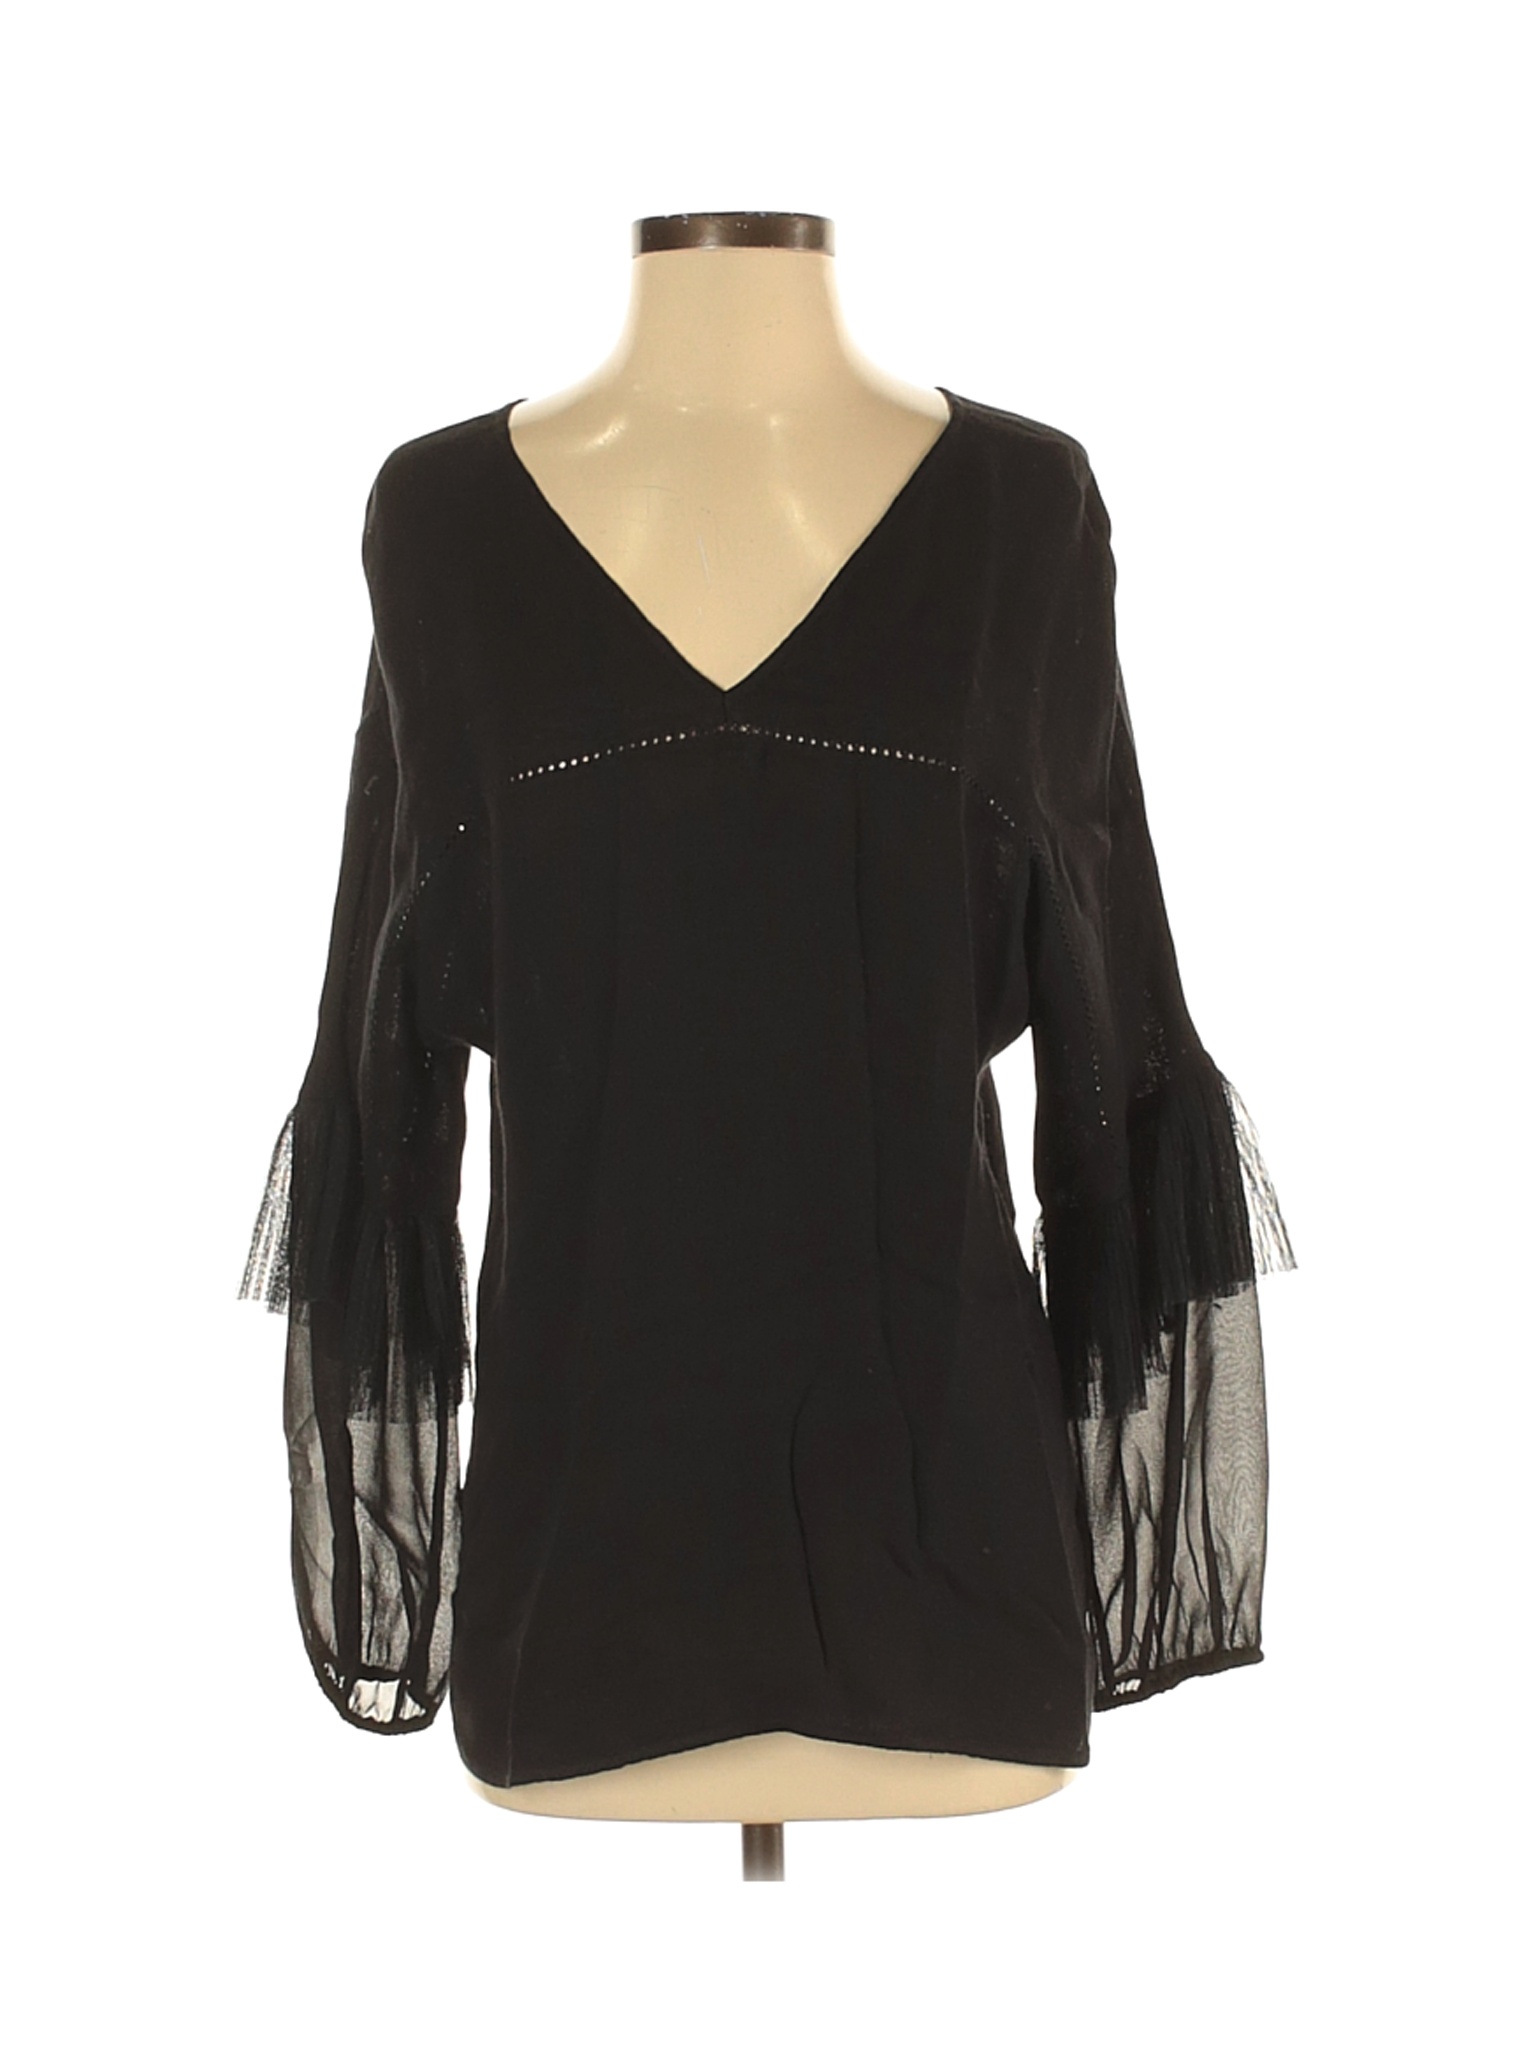 Club Monaco Women Black Long Sleeve Blouse S | eBay